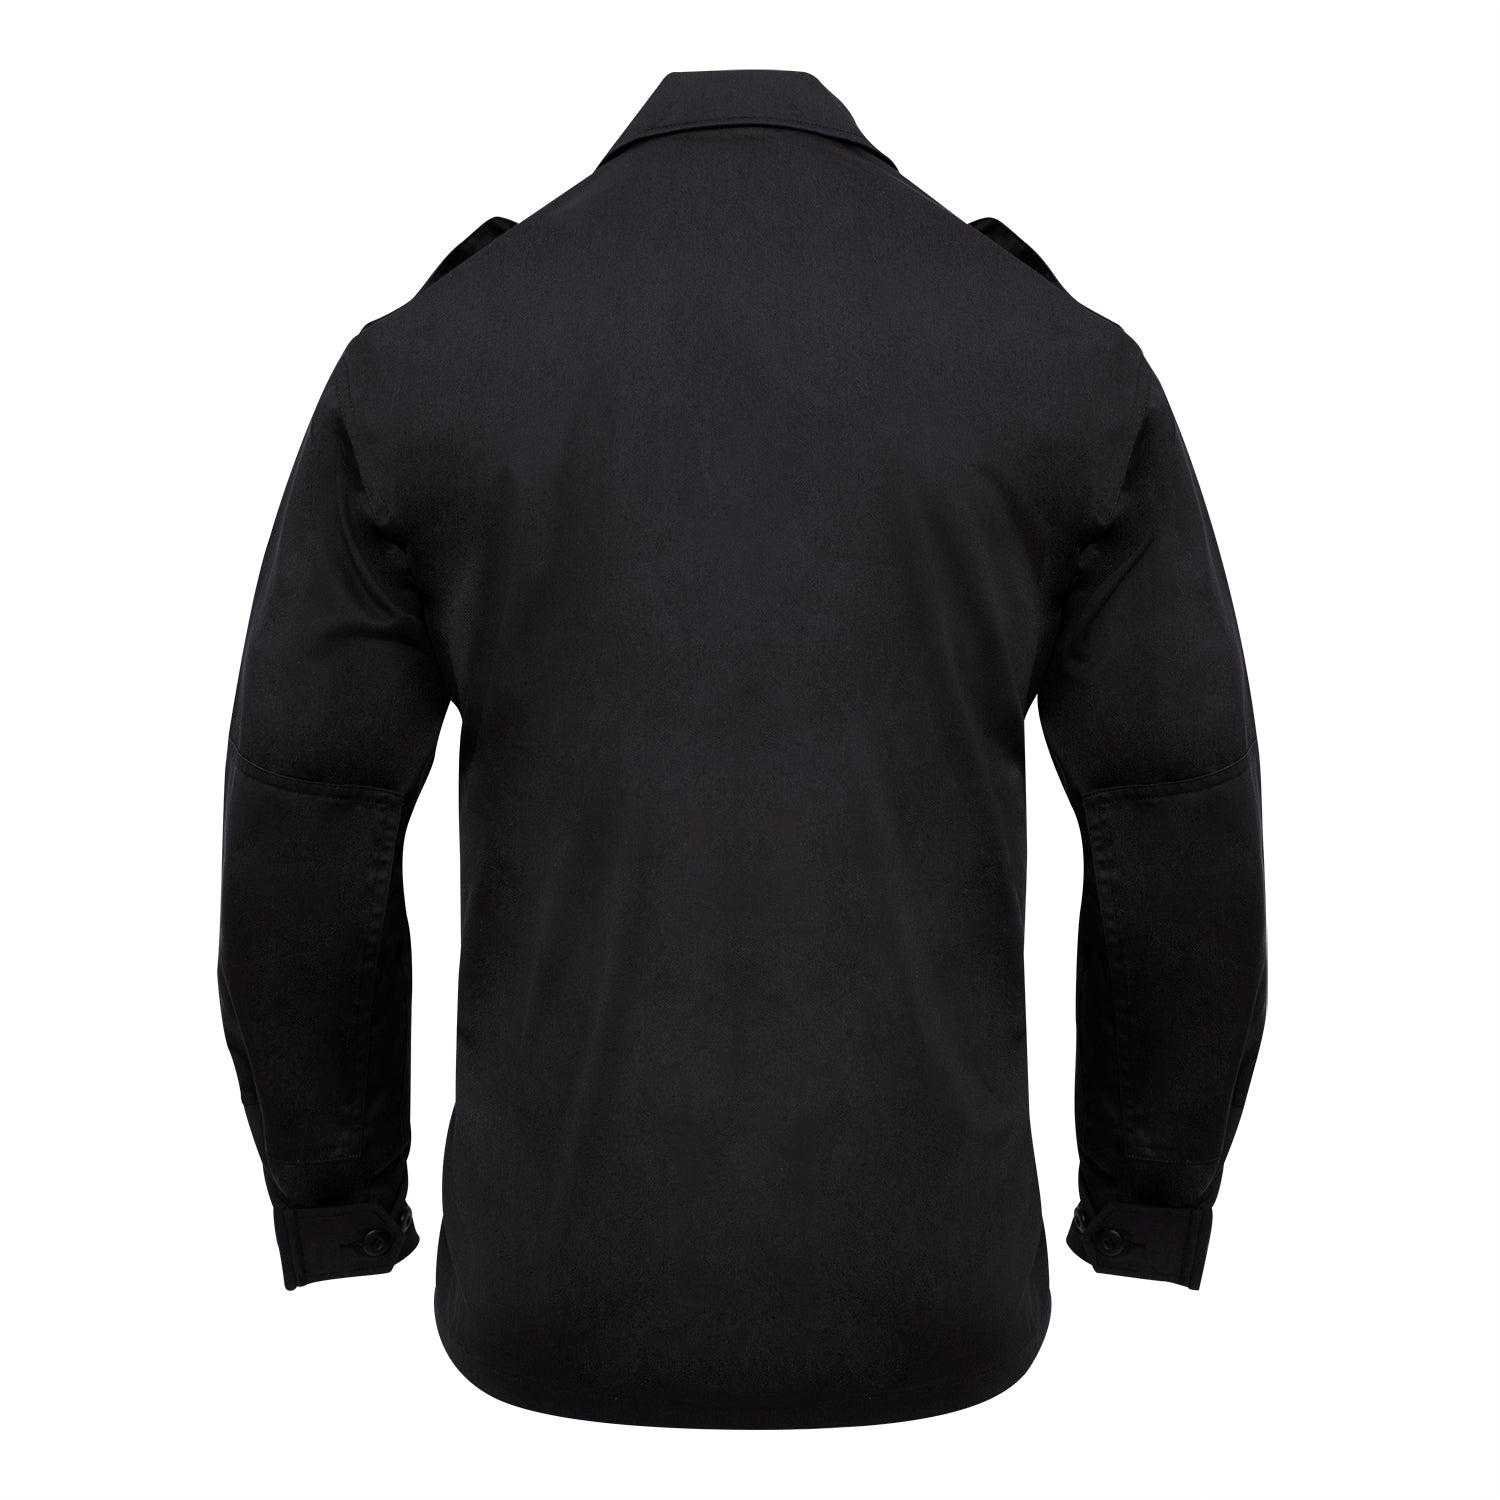 Rothco Tactical 2 Pocket BDU (Battle Dress Uniform) Shirt Black ...